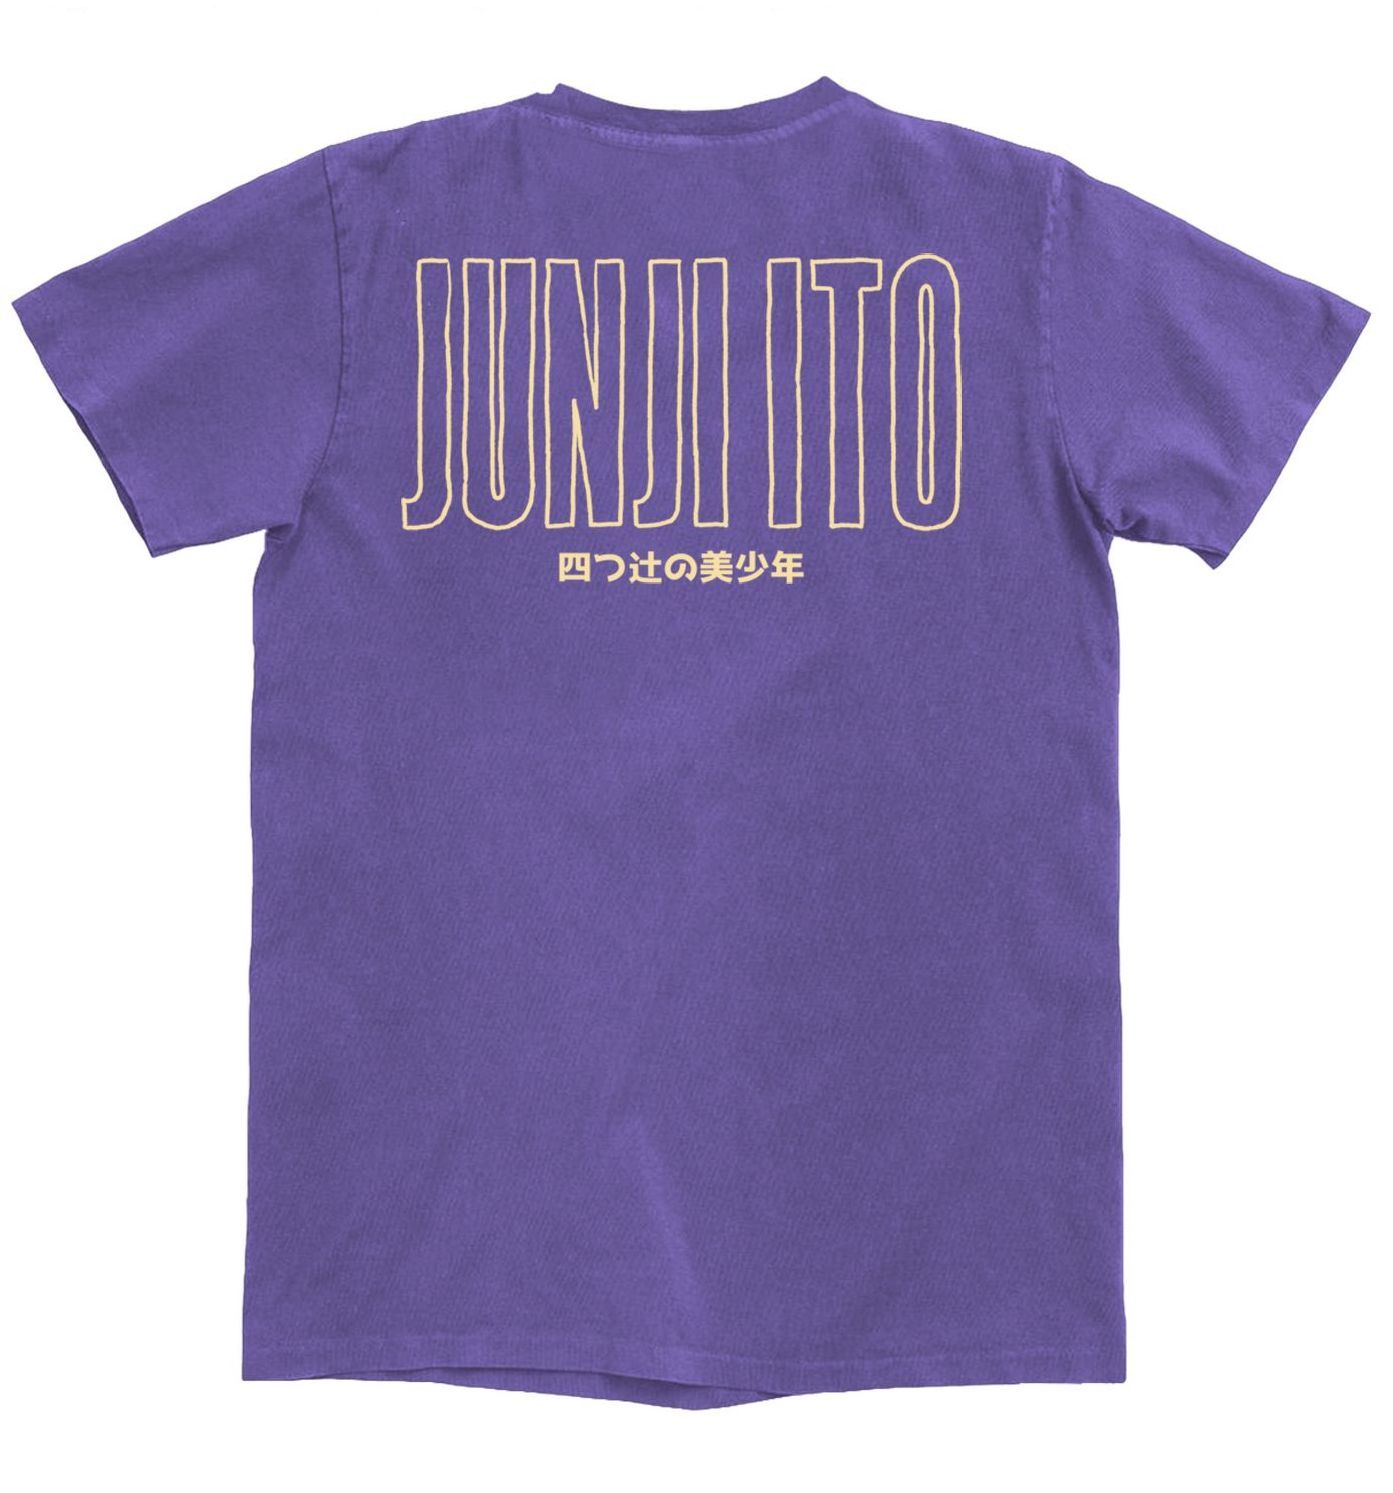 Junji Ito - Deathbed's Love T-Shirt image count 1